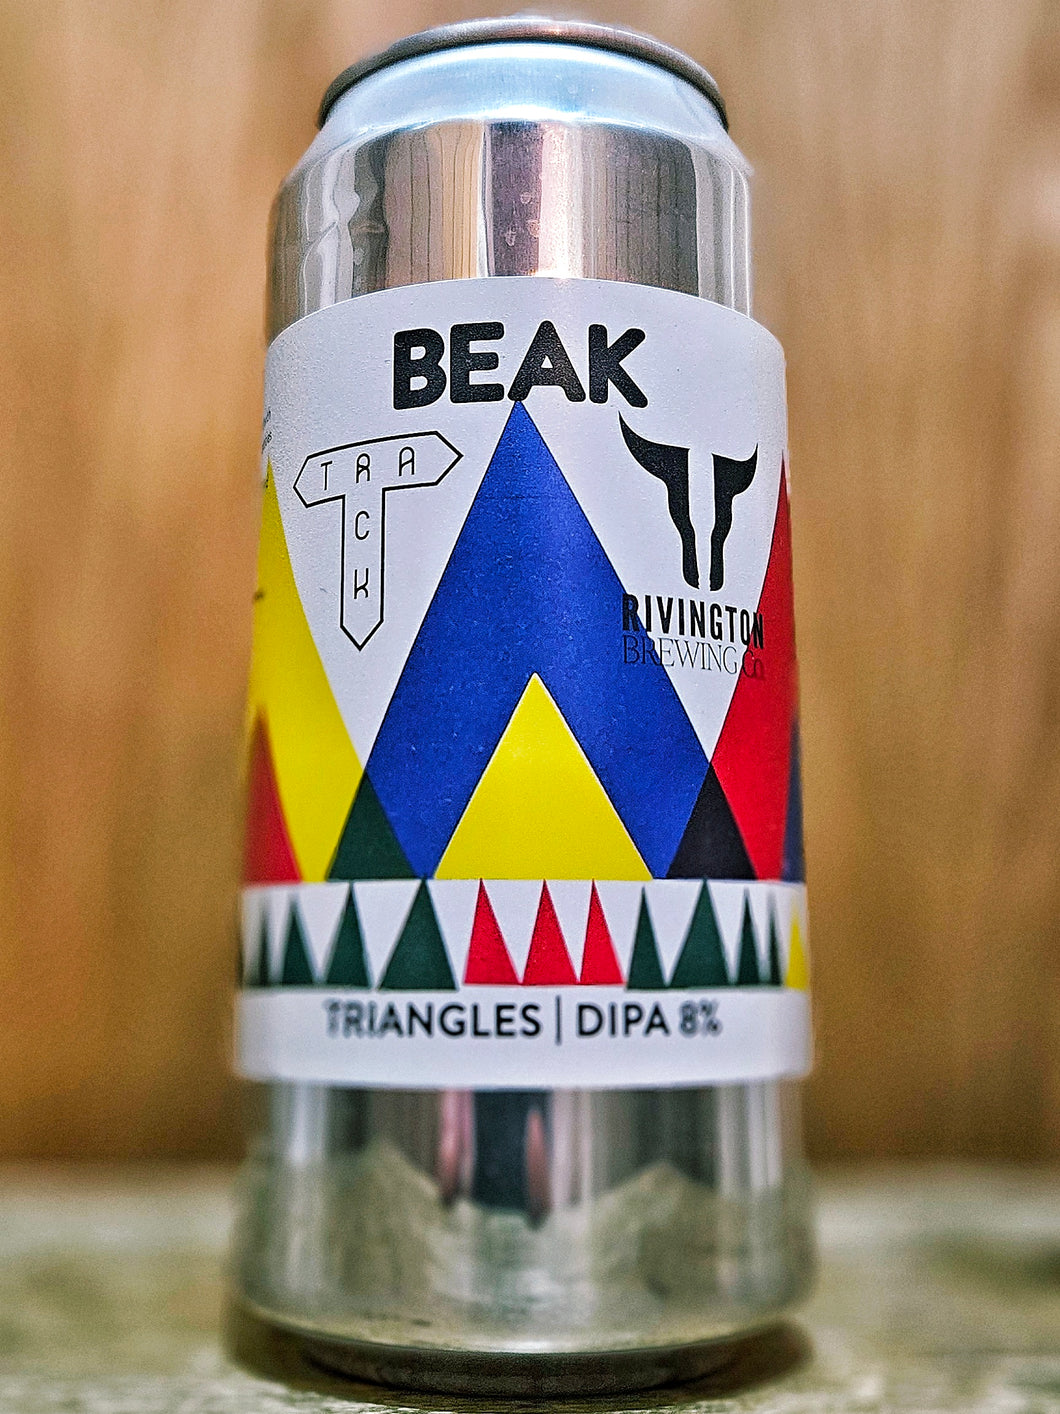 Beak Brewery v Track v Rivington - Triangles